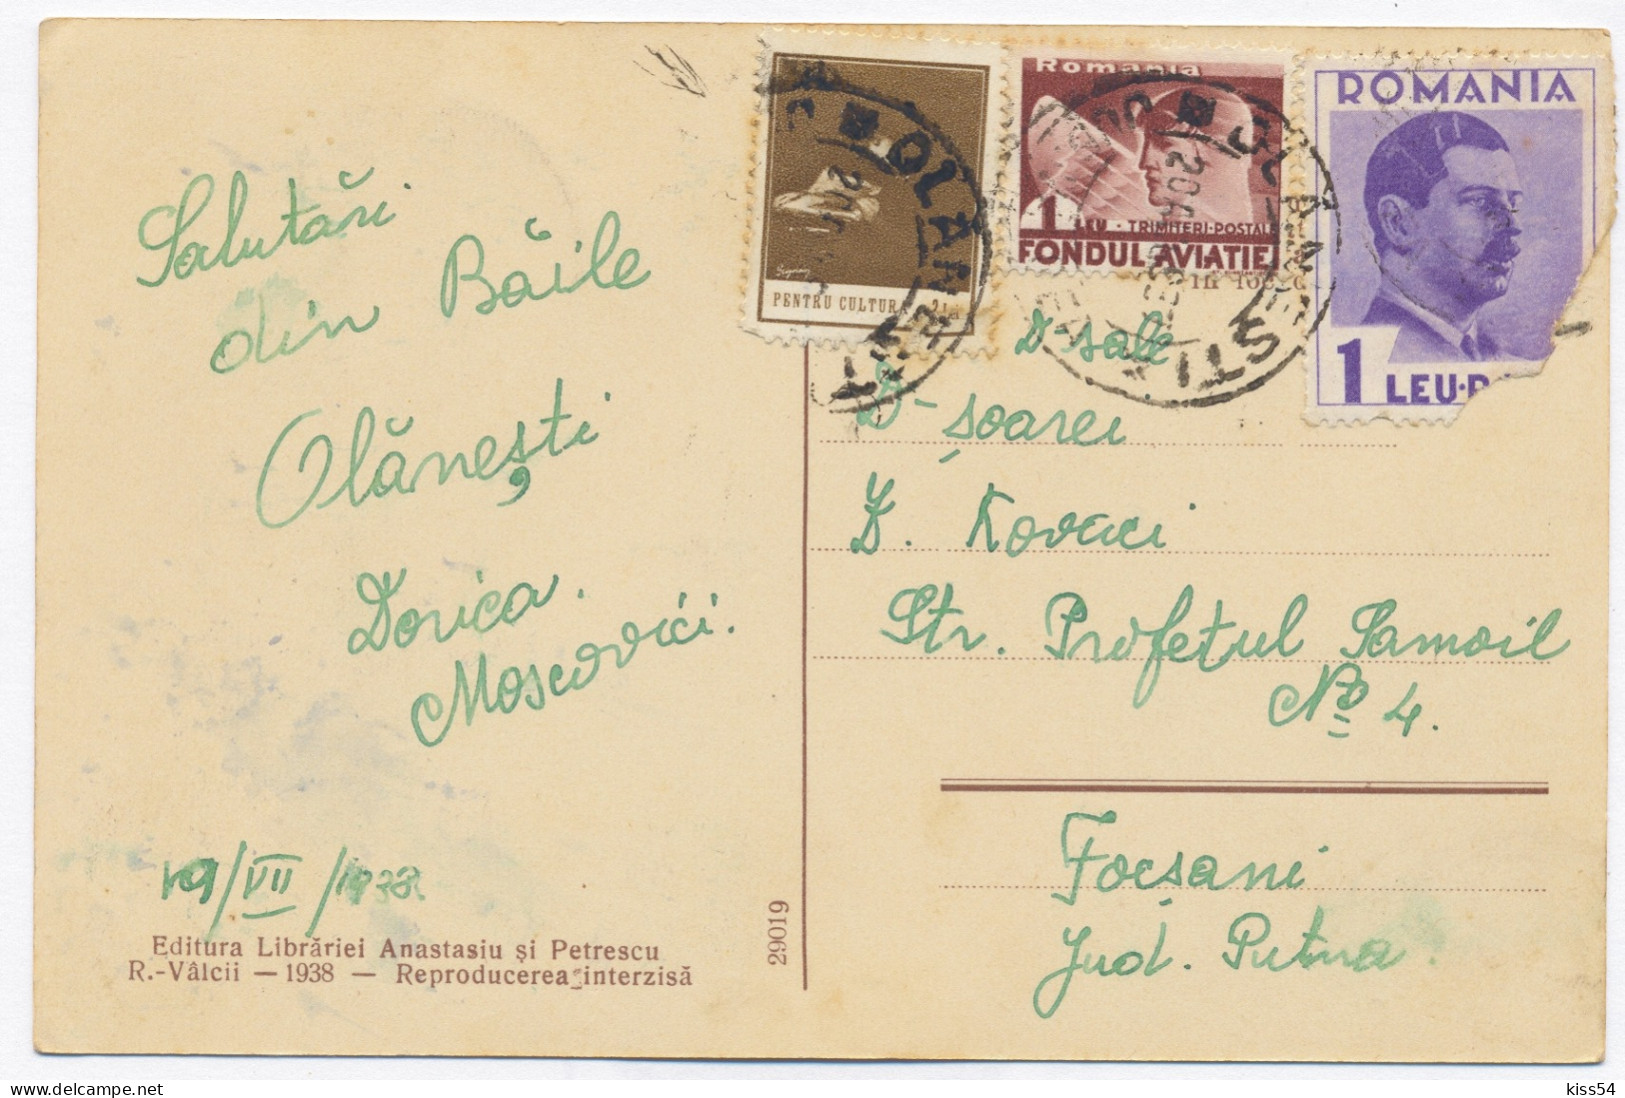 RO 45 - 11549 OLANESTI, Valcea, Park, Romania - Old Postcard - Used - 1938 - Rumänien